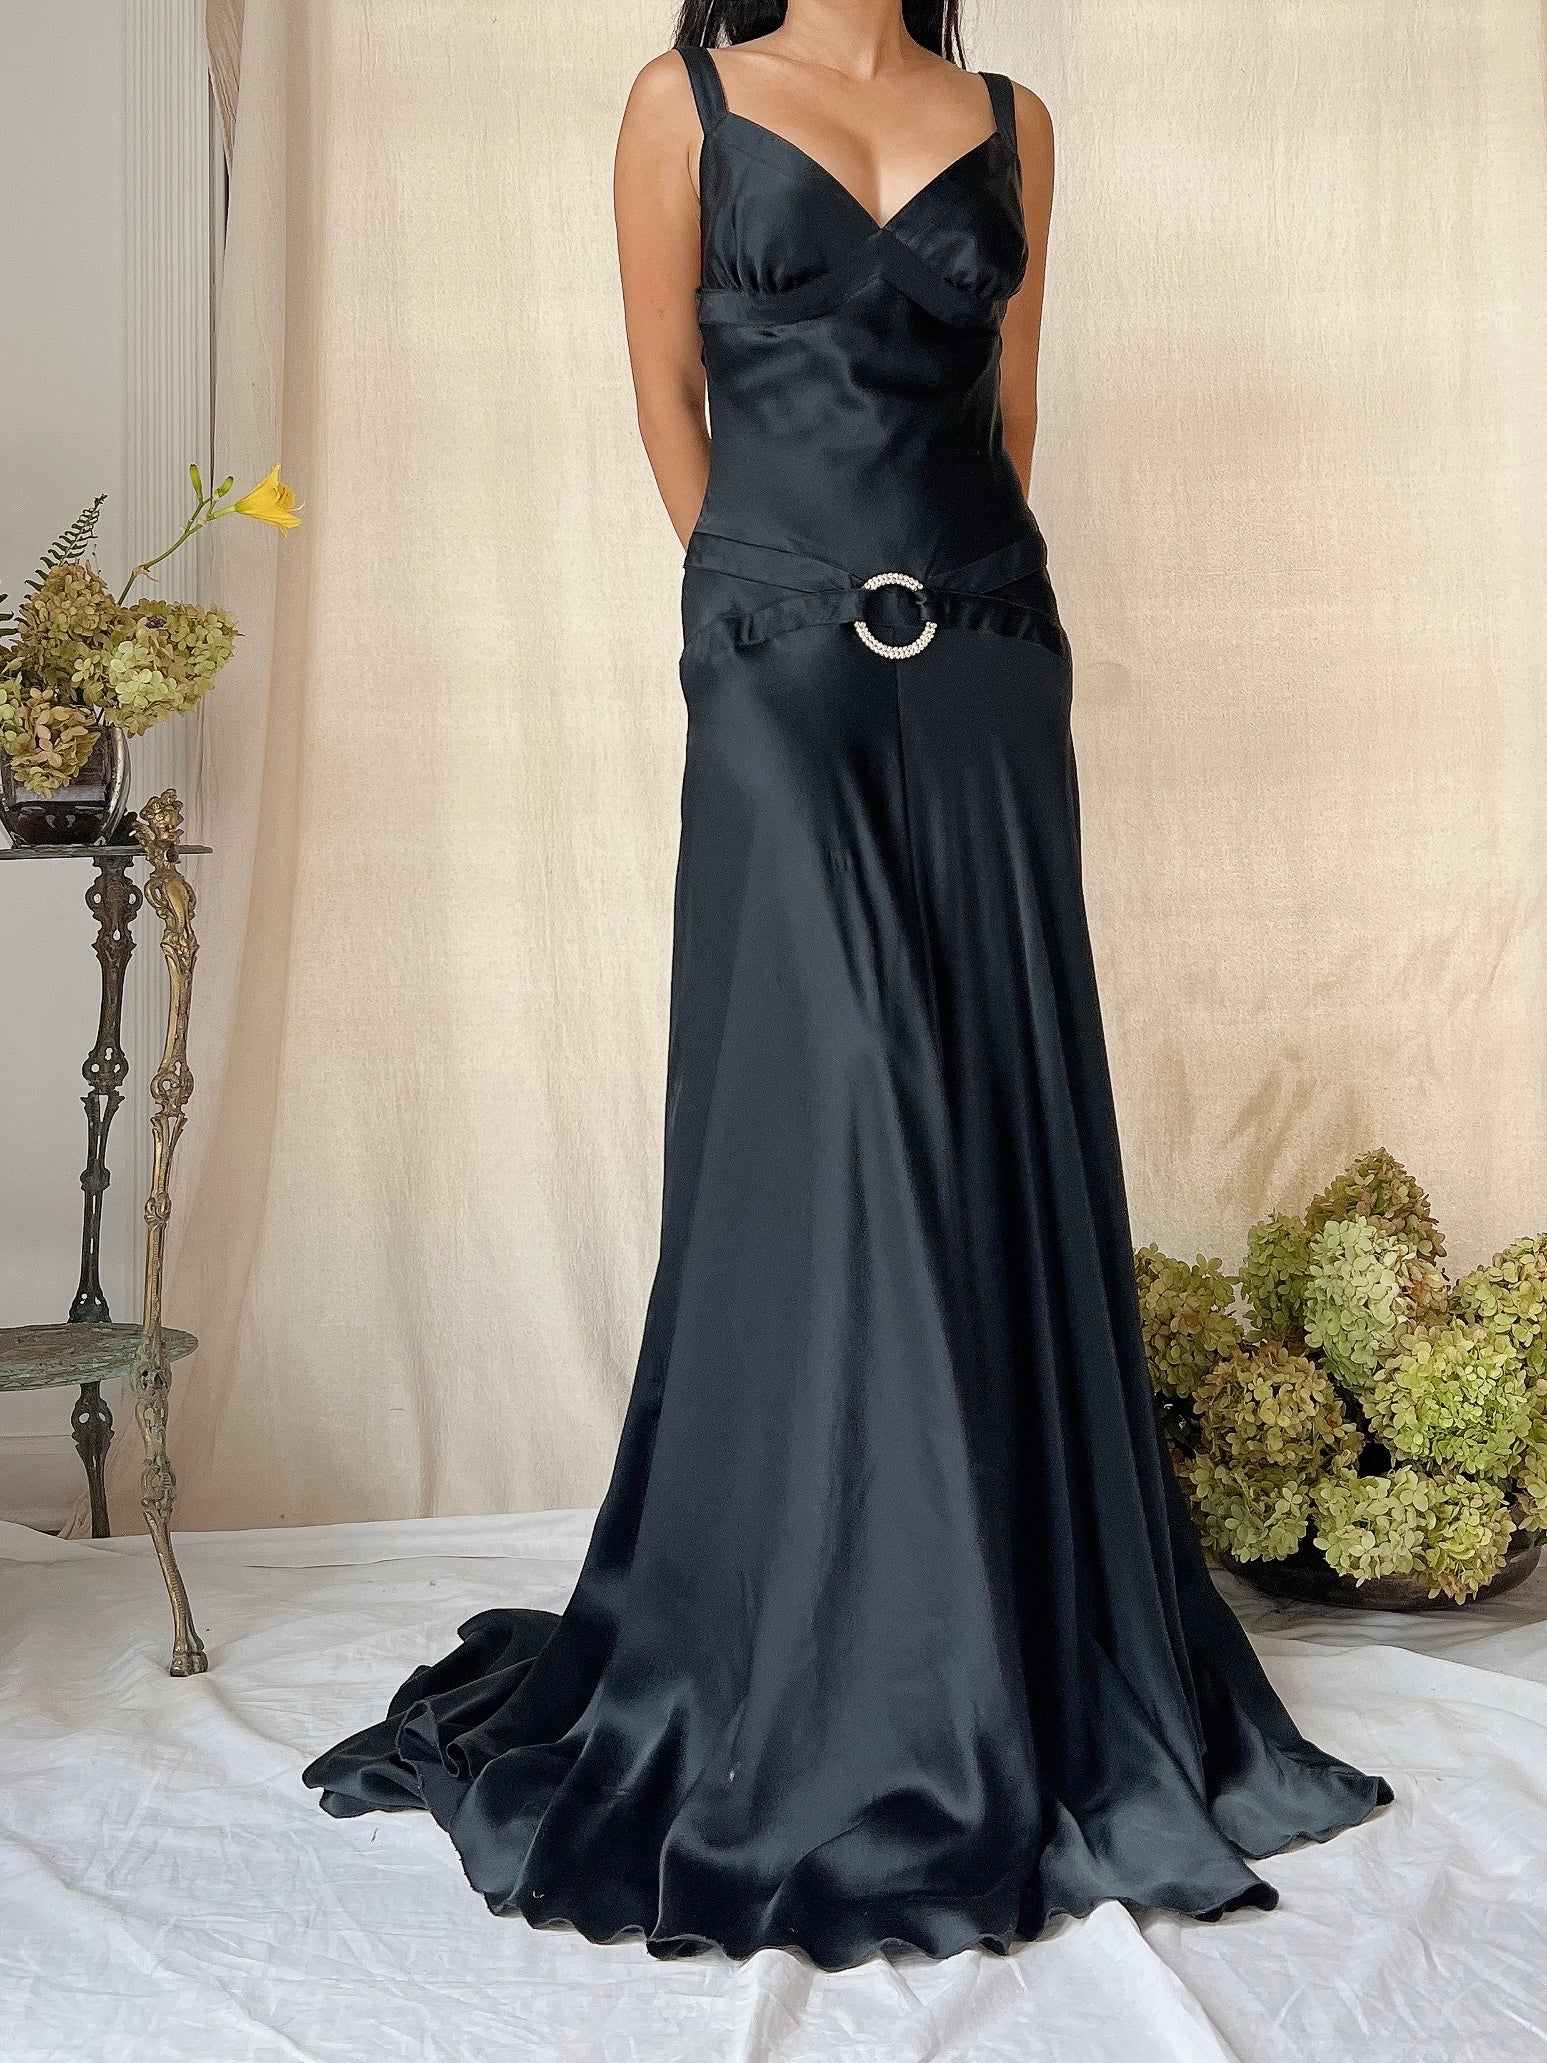 Vintage Black Silk Bias Cut Gown - S